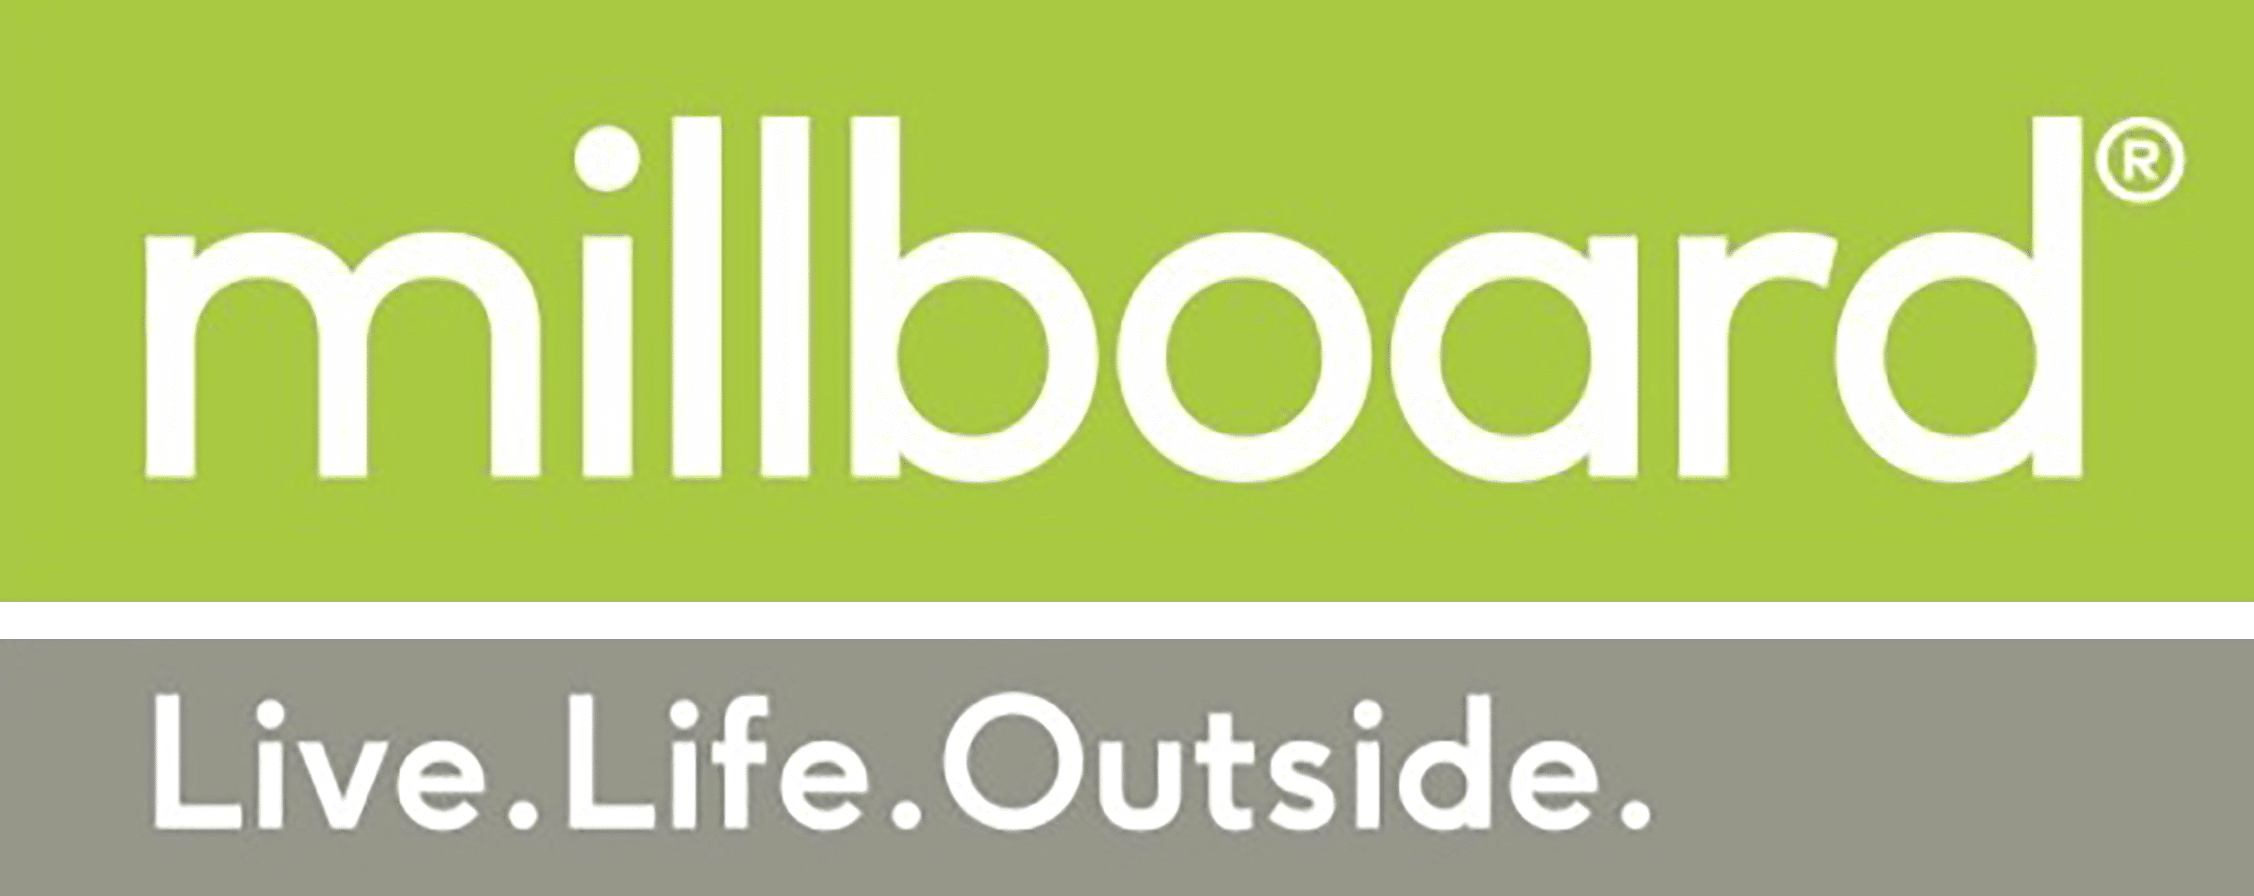 Millboard logo